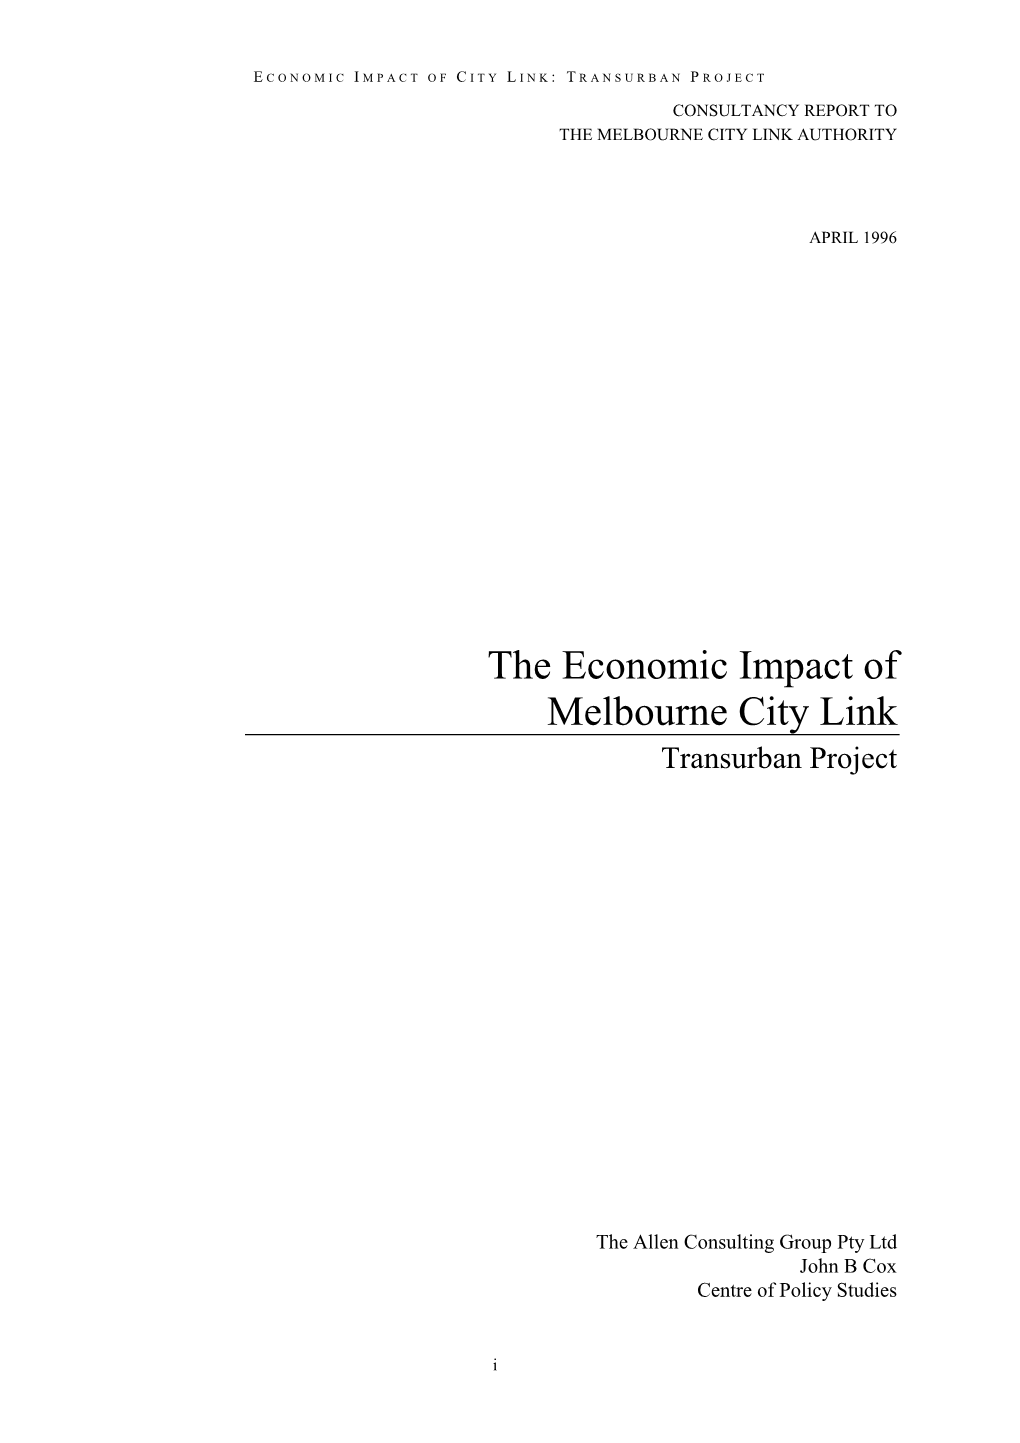 The Economic Impact of Melbourne City Link Transurban Project